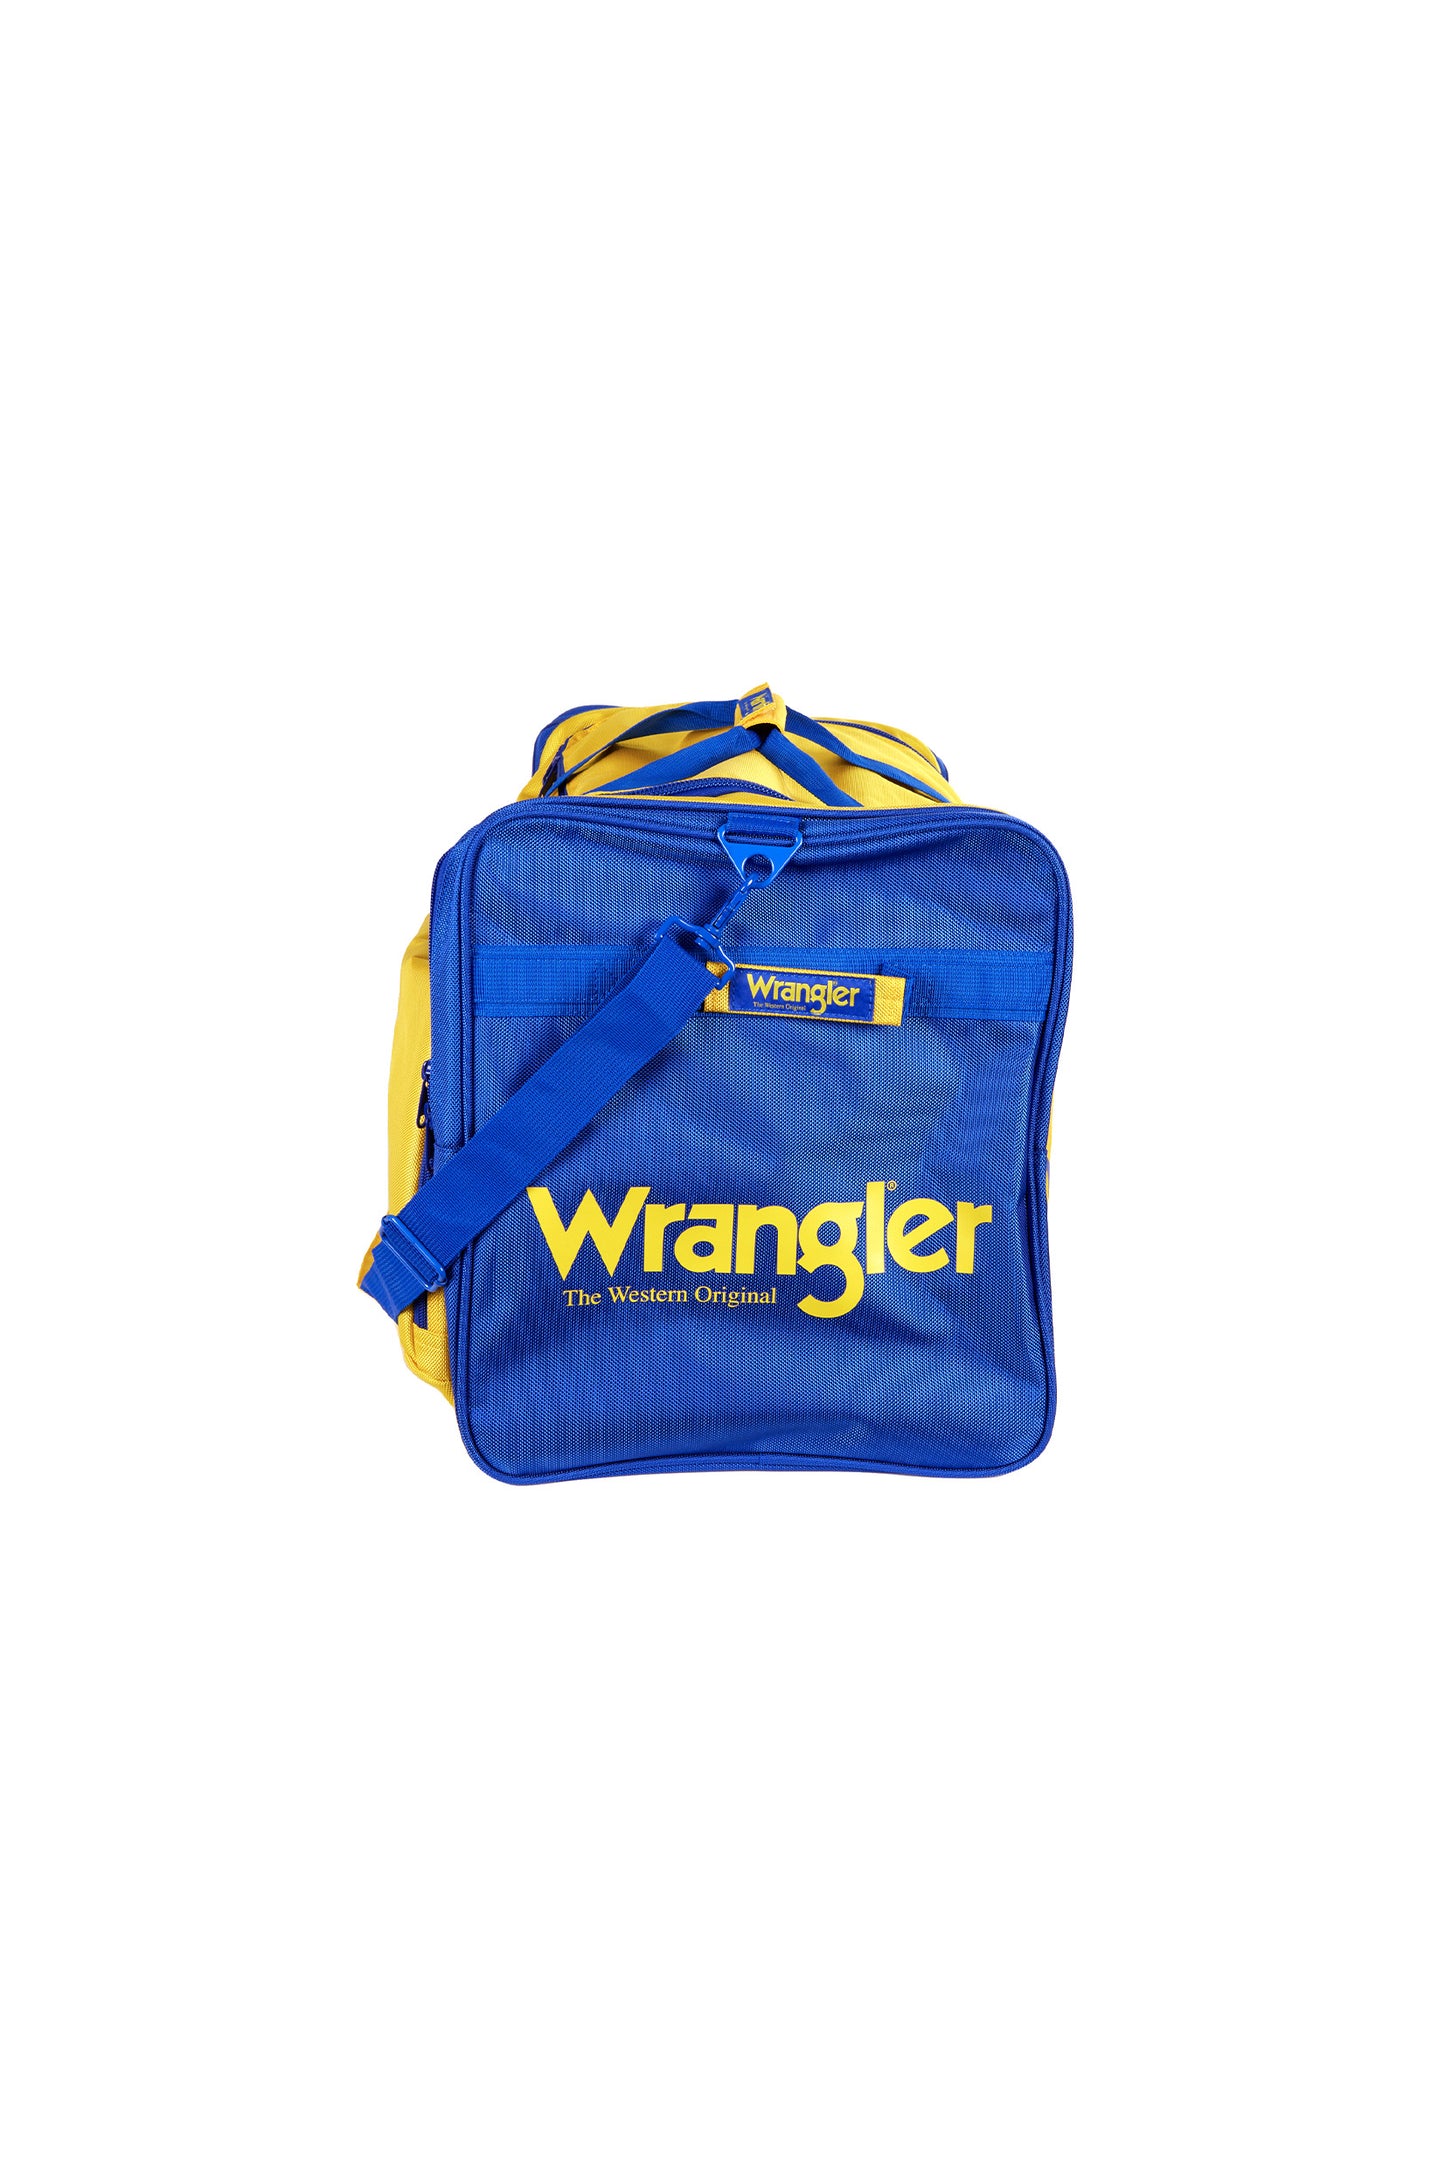 Wrangler Iconic Large Gear Bag - Blue/Yellow - XCP1920BAG